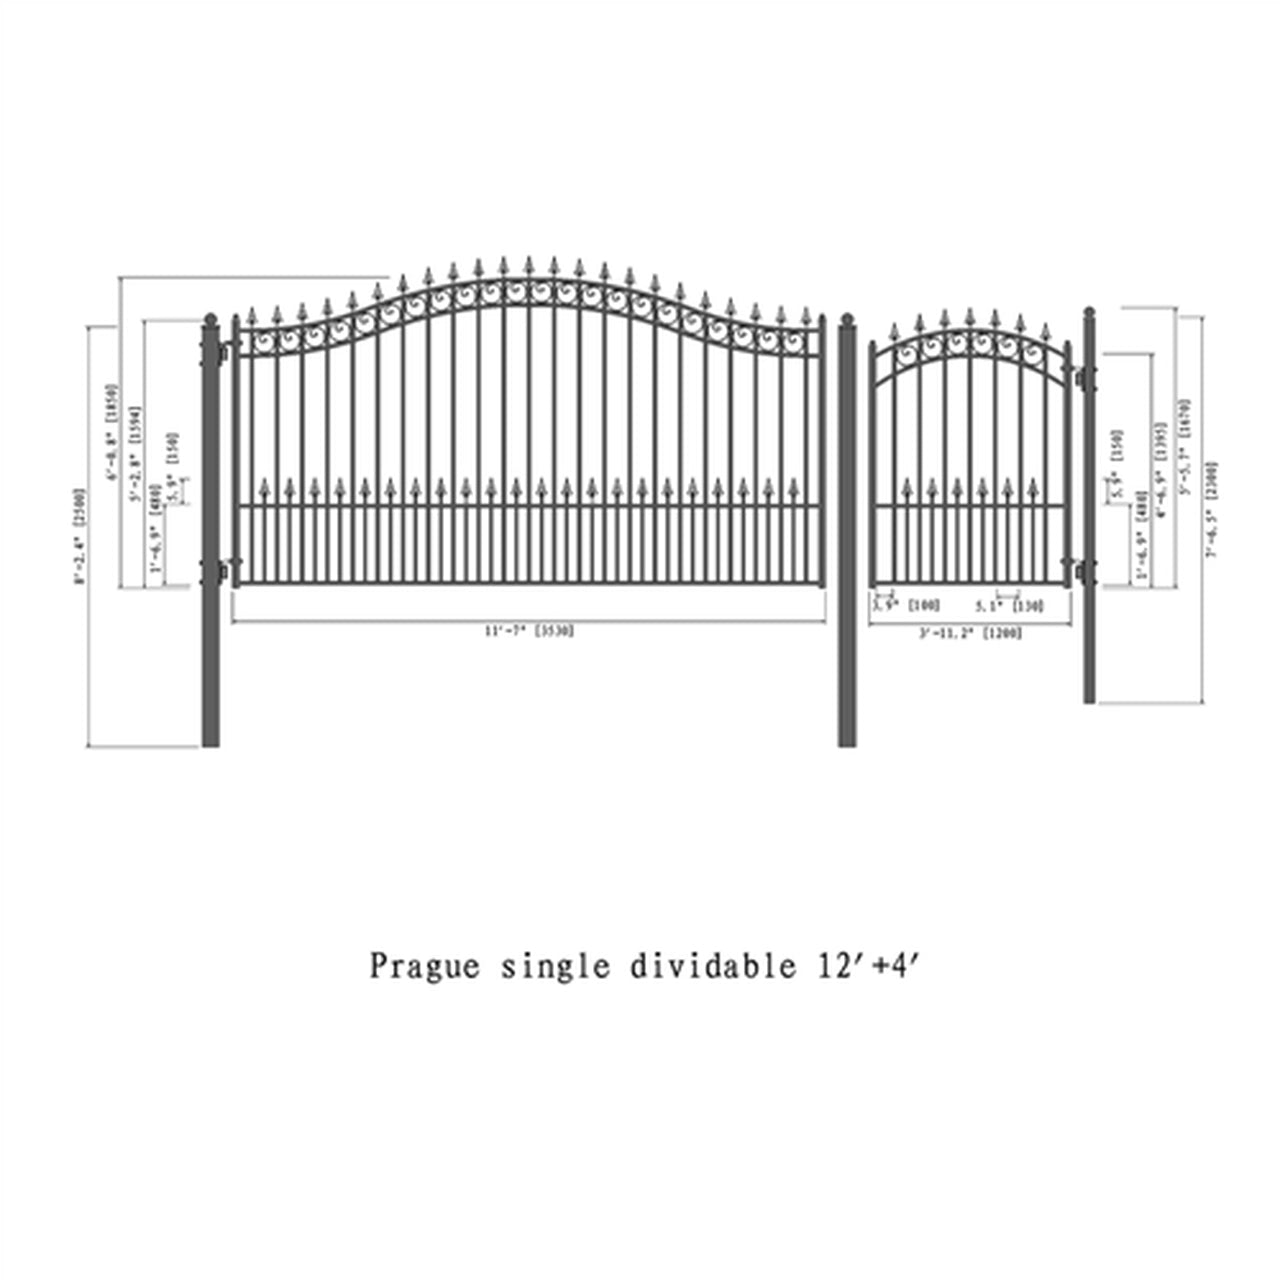 Aleko Steel Single Swing Driveway Gate - PRAGUE Style - 12